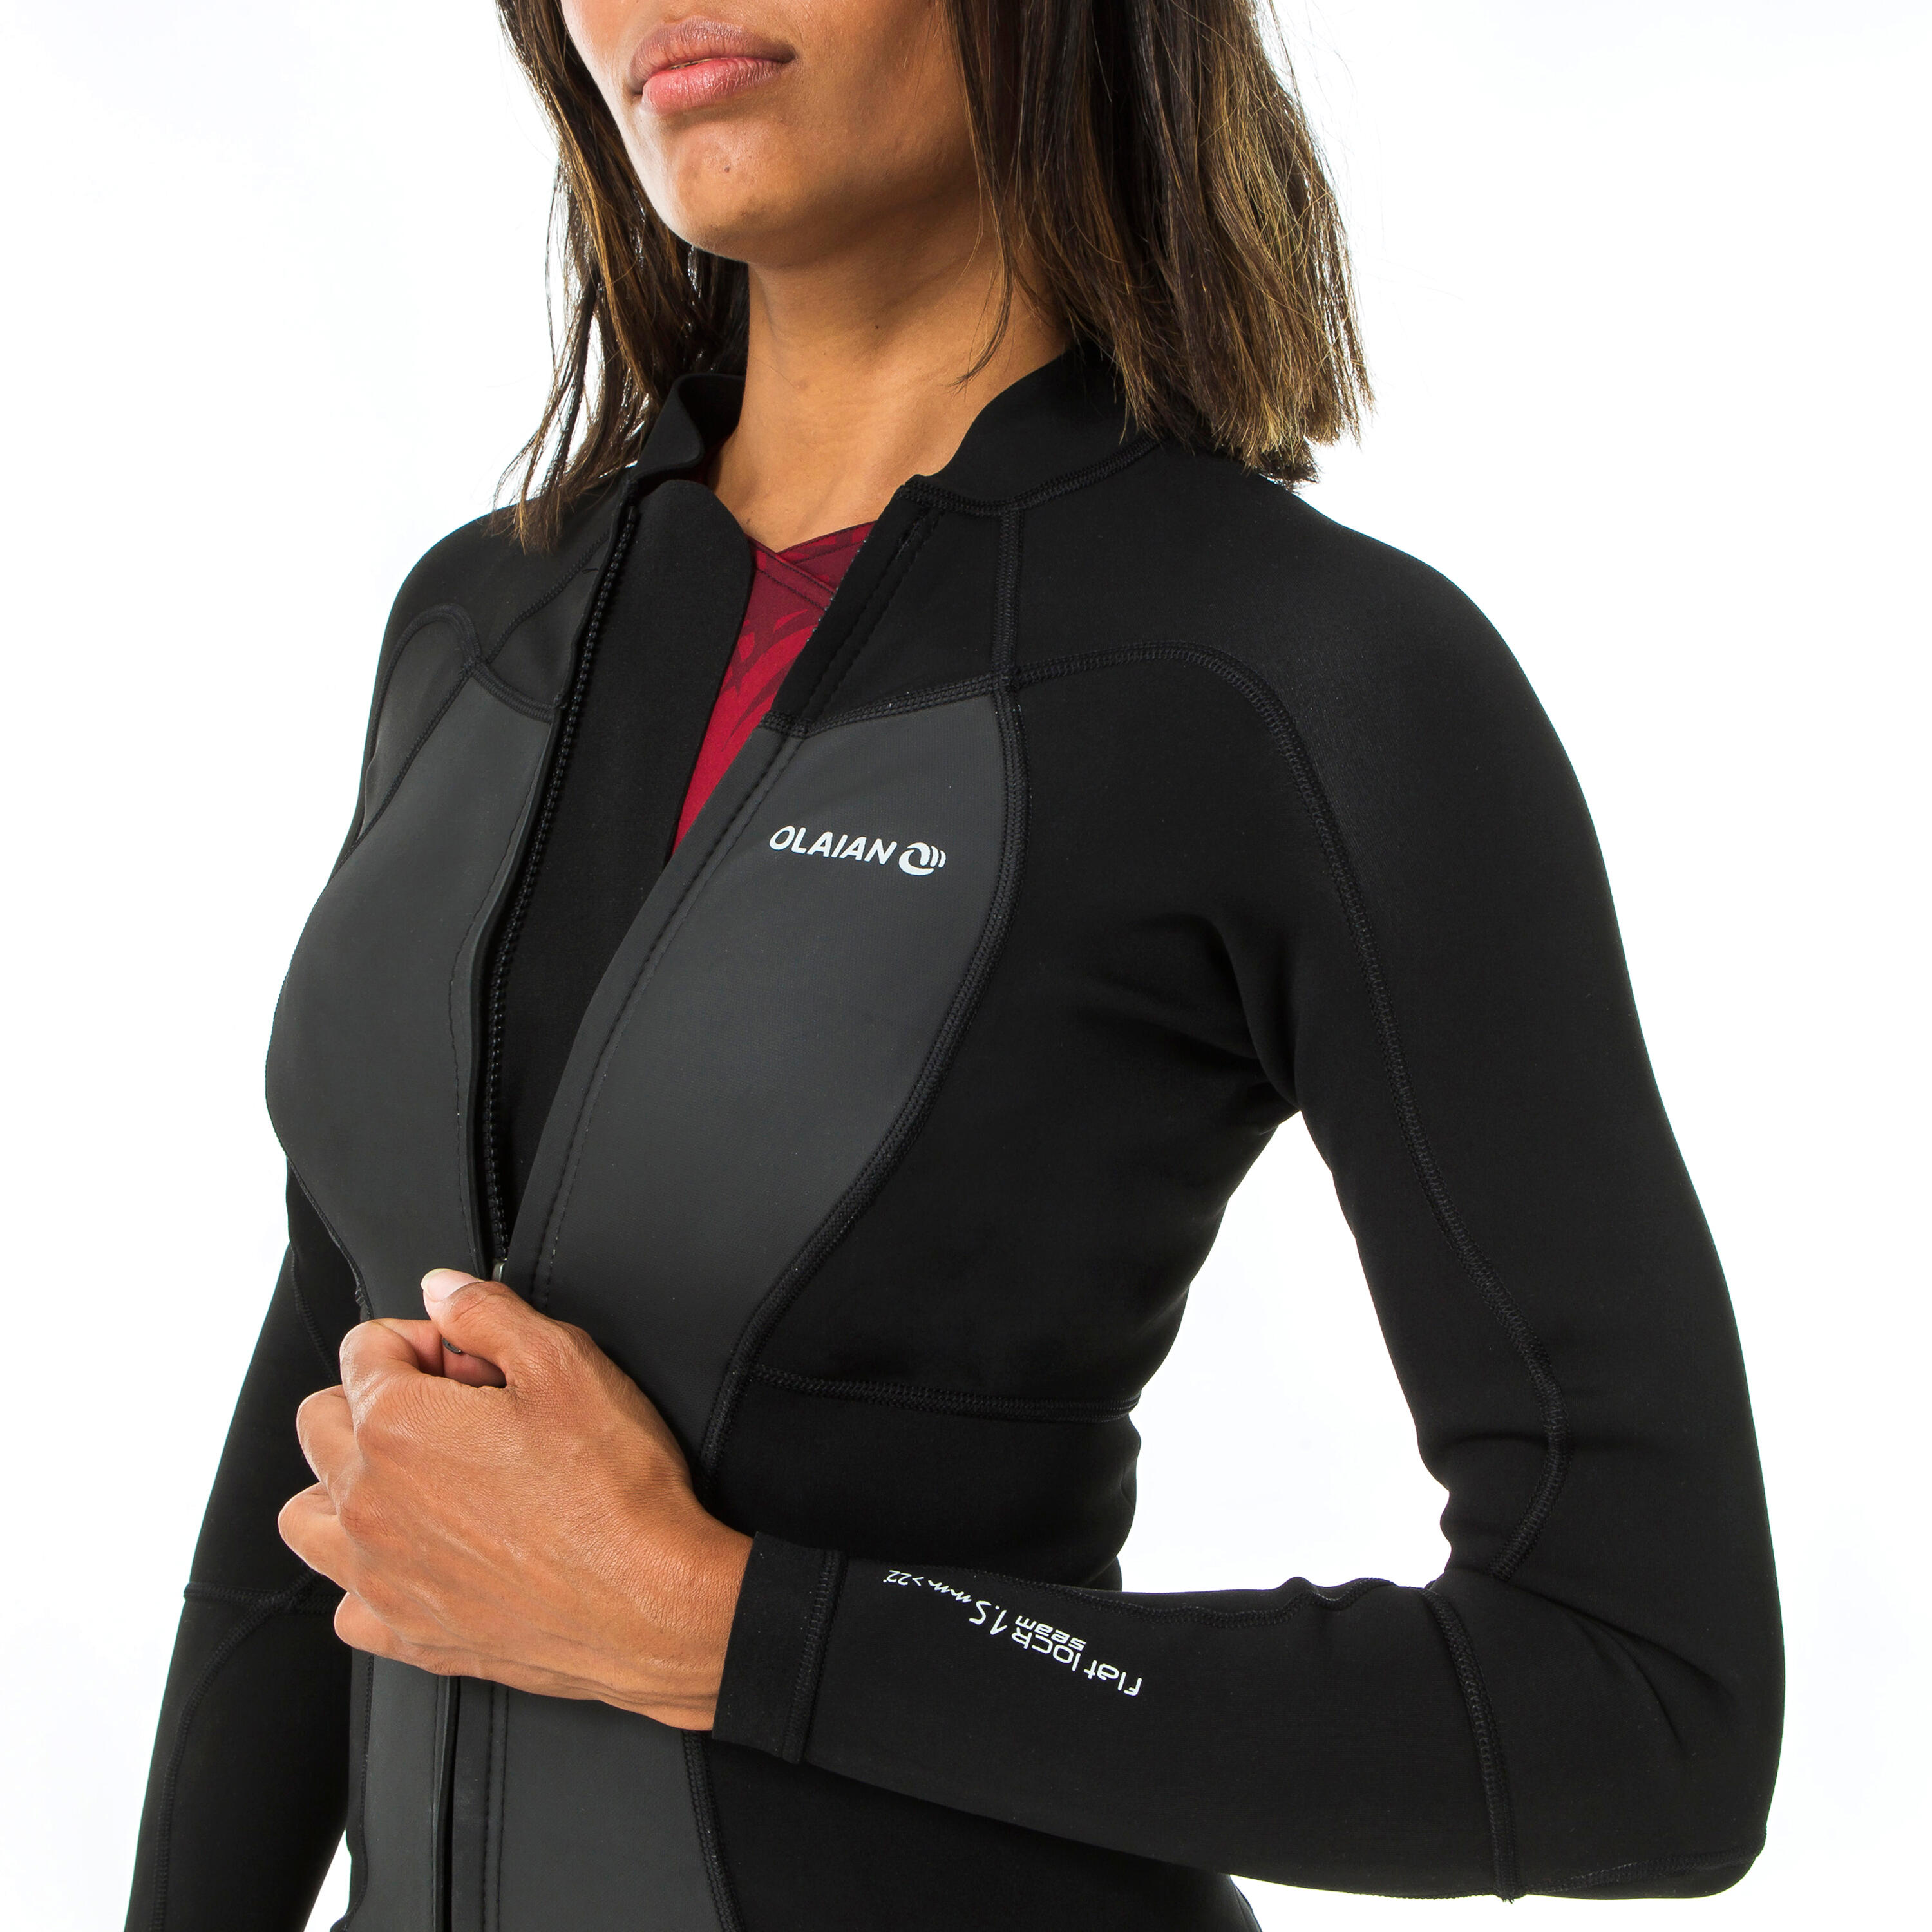 Women’s advanced neoprene longjane wetsuit 1.5 mm extra-soft with no zip 13/14